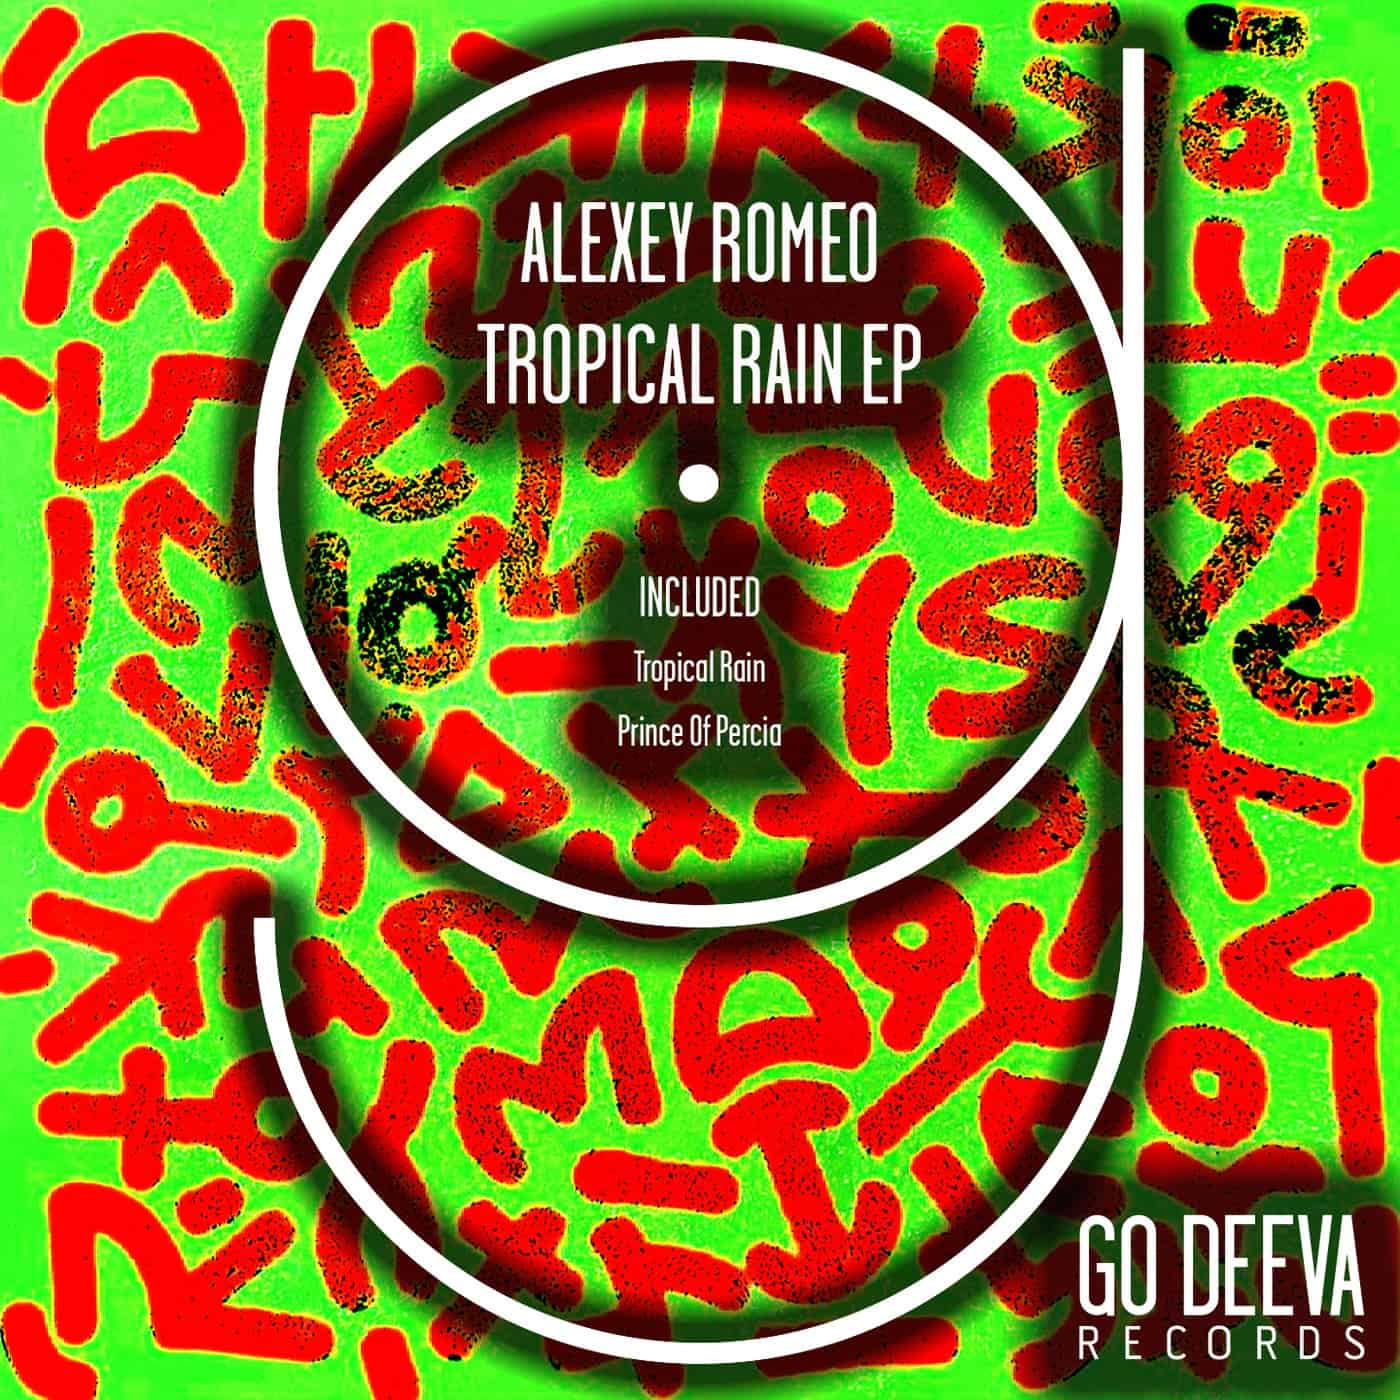 image cover: Alexey Romeo - Tropical Rain Ep / Go Deeva Records